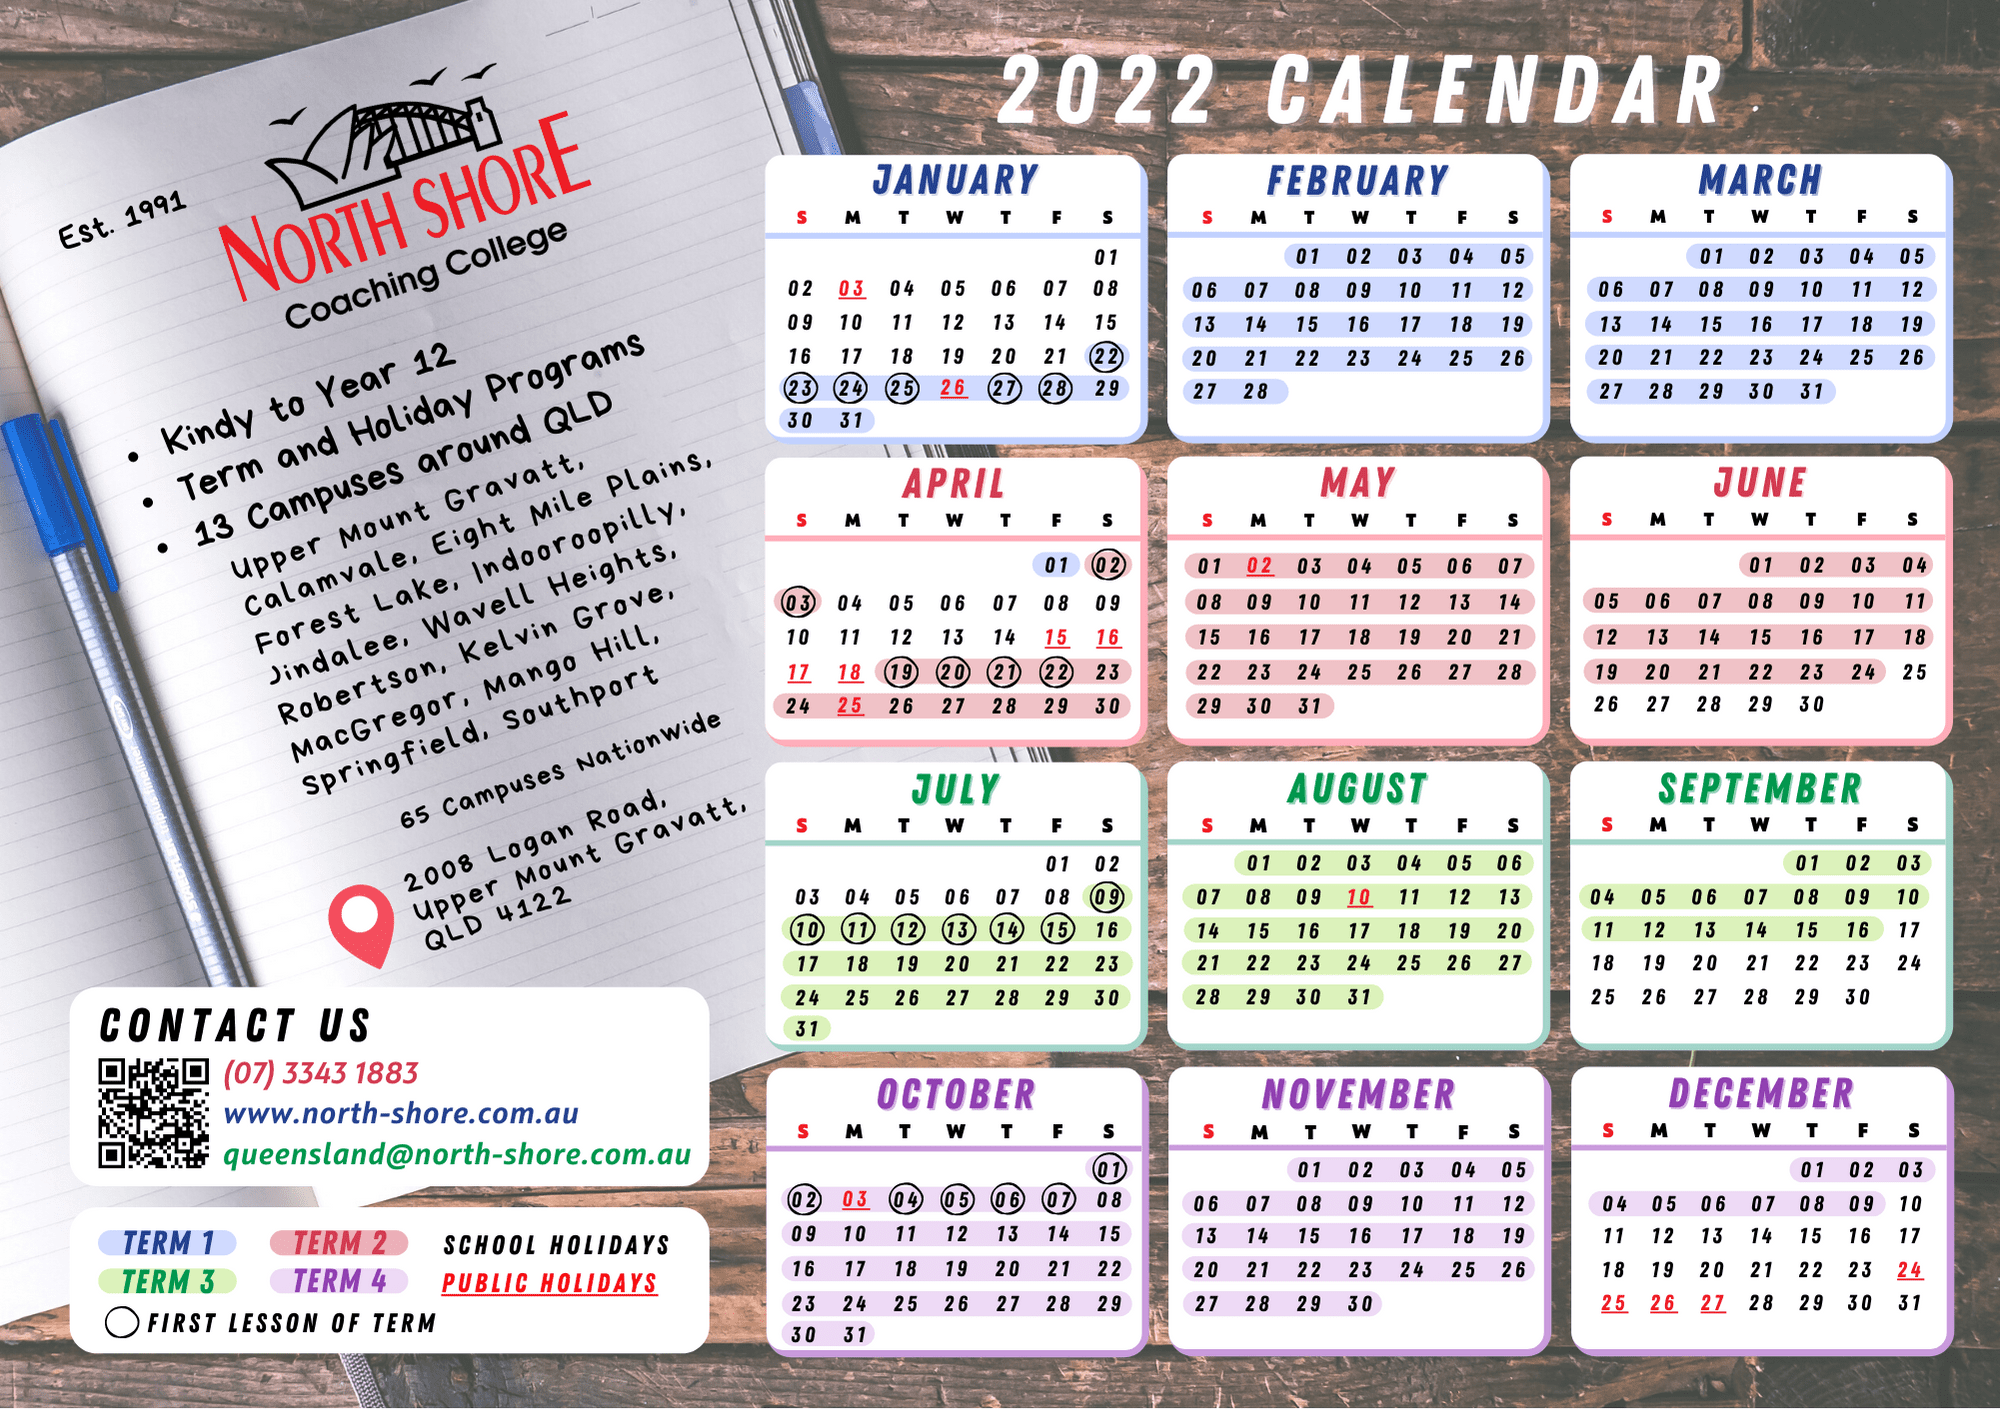 [QLD] 2022 Queensland Calendar North Shore Coaching College